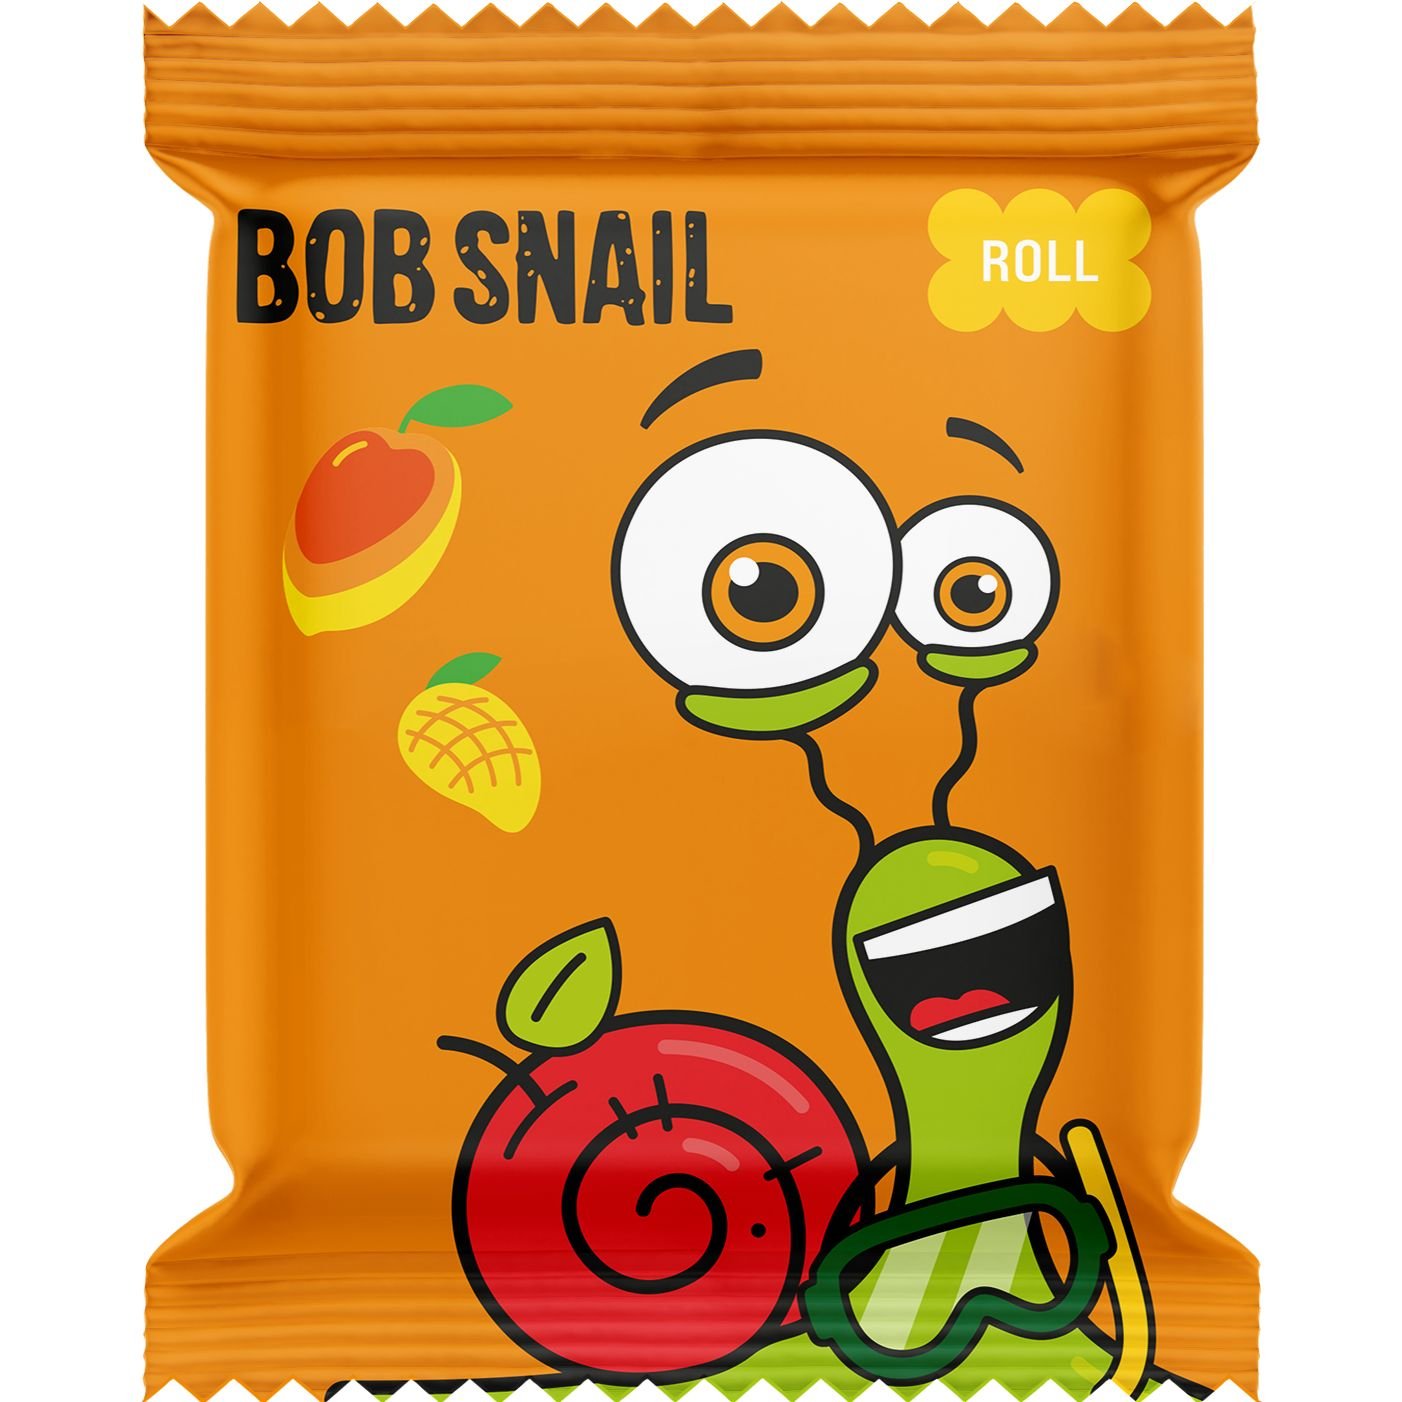 Фруктовые манговые конфеты Bob Snail 100 г (10 шт. х 10 г) - фото 2